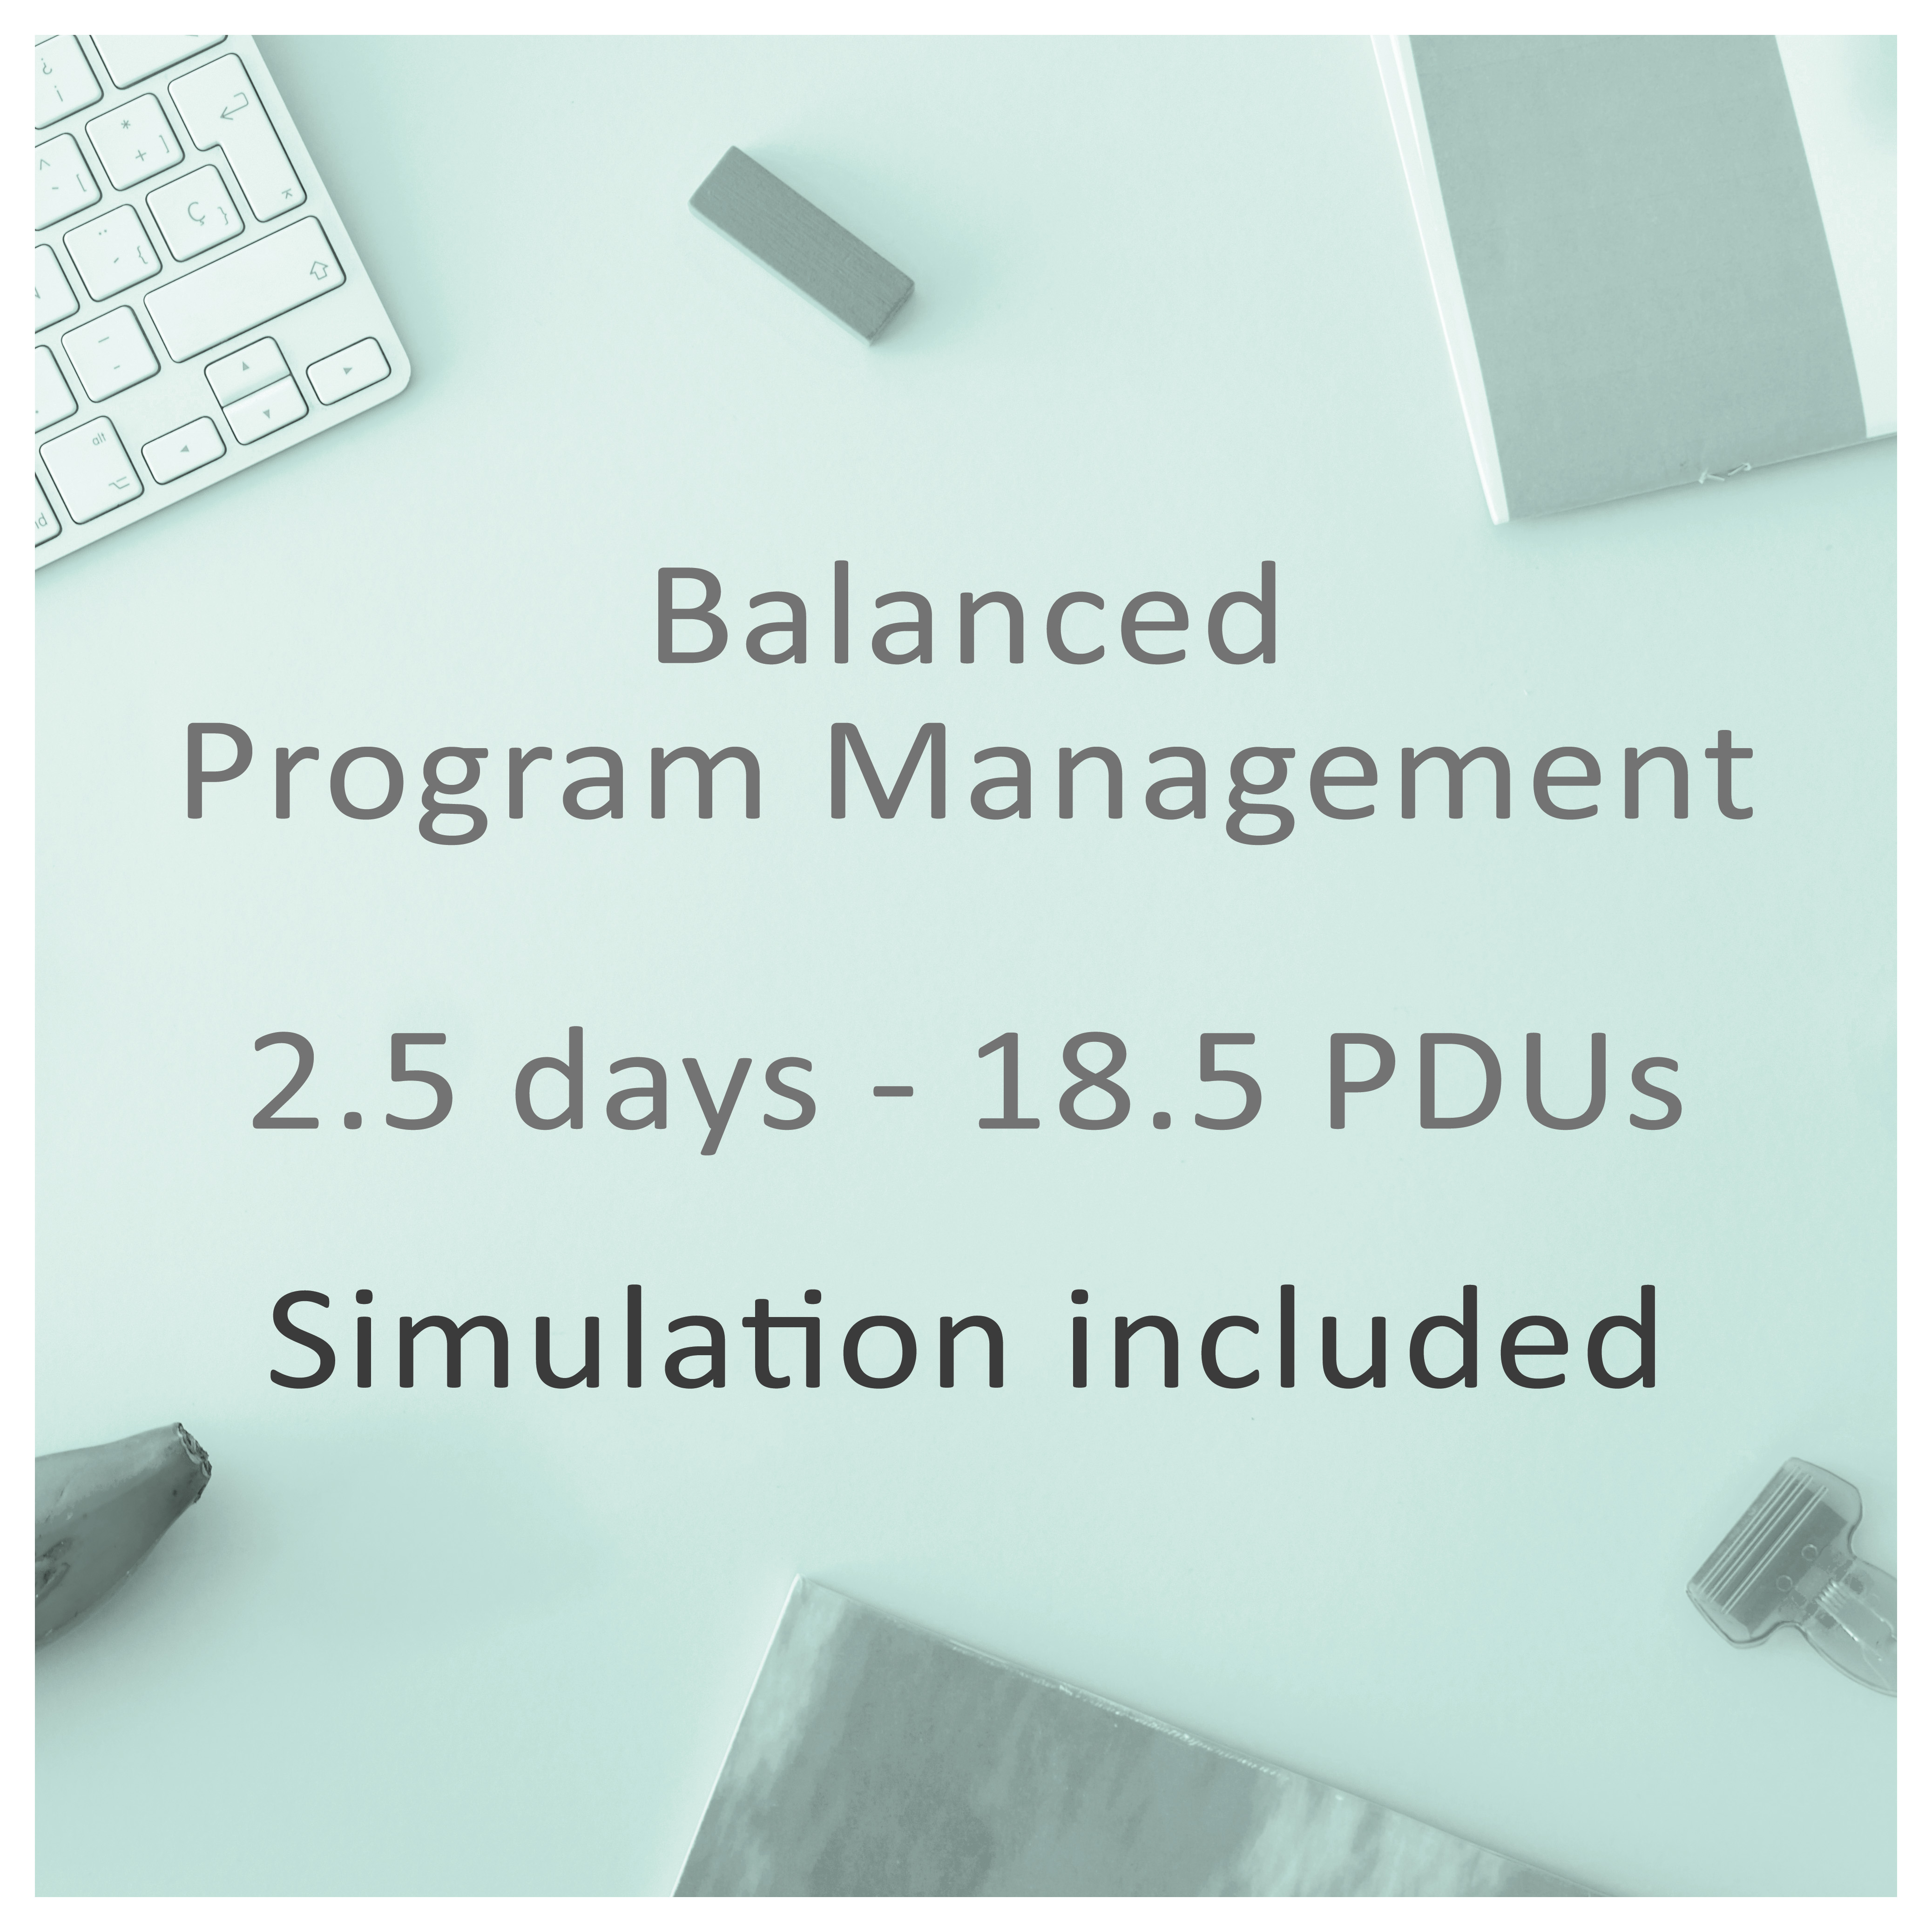 Balanced Program Management